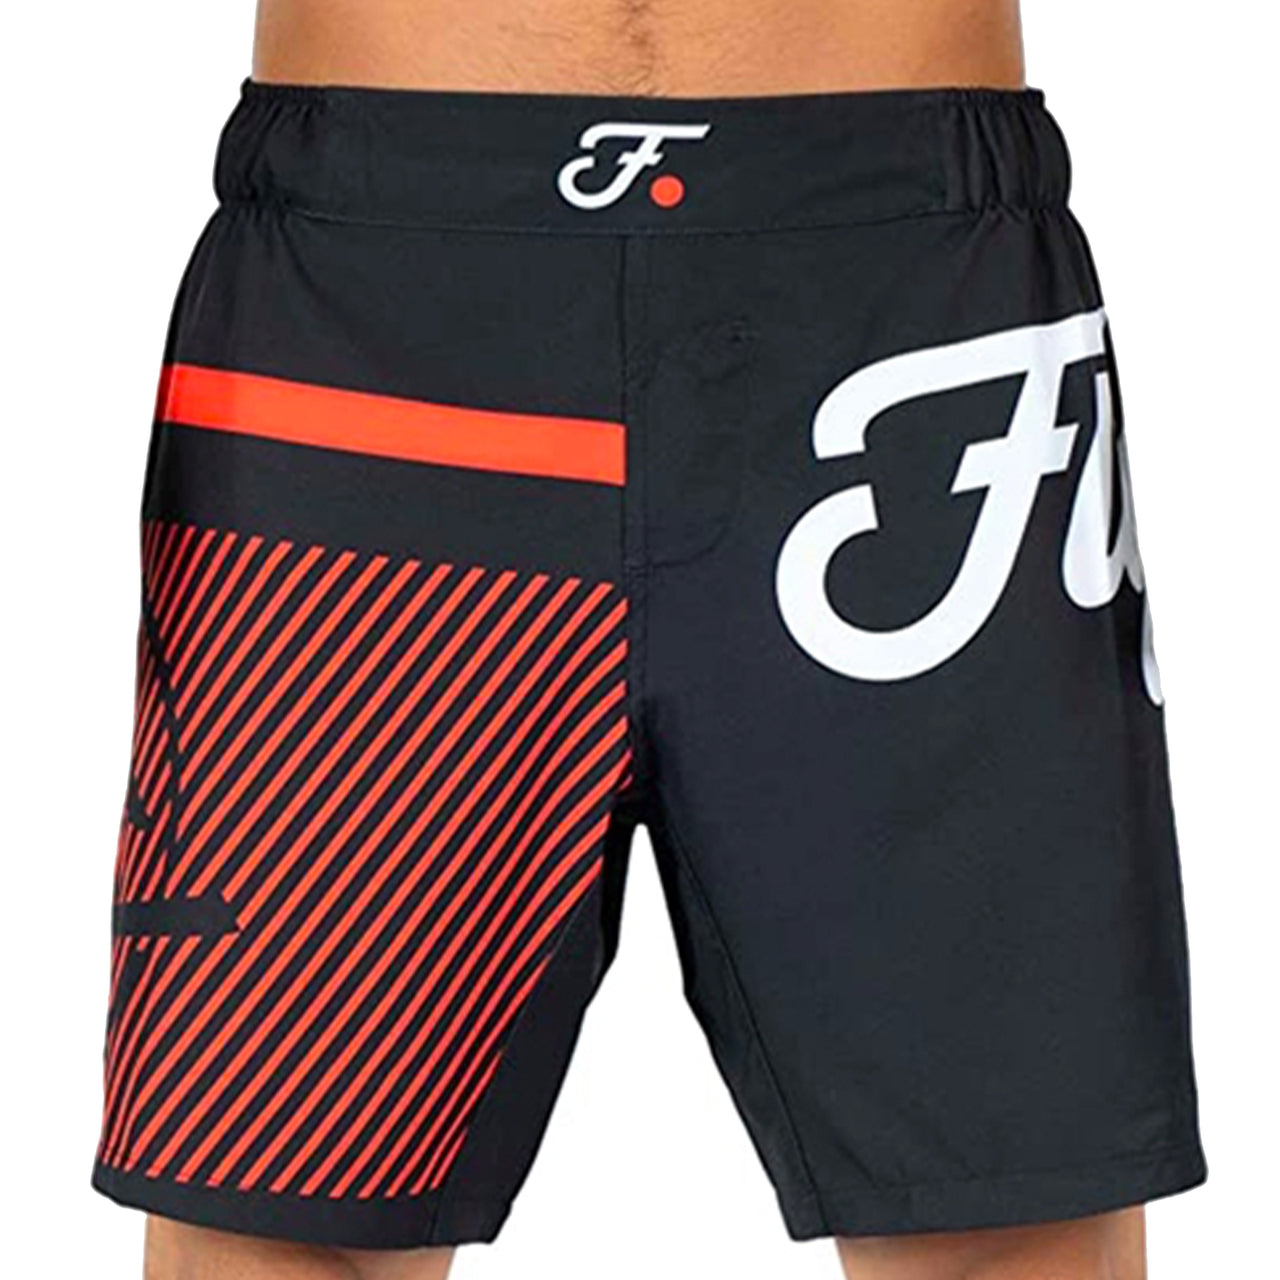 Fuji "Script" Shorts - Black/Red